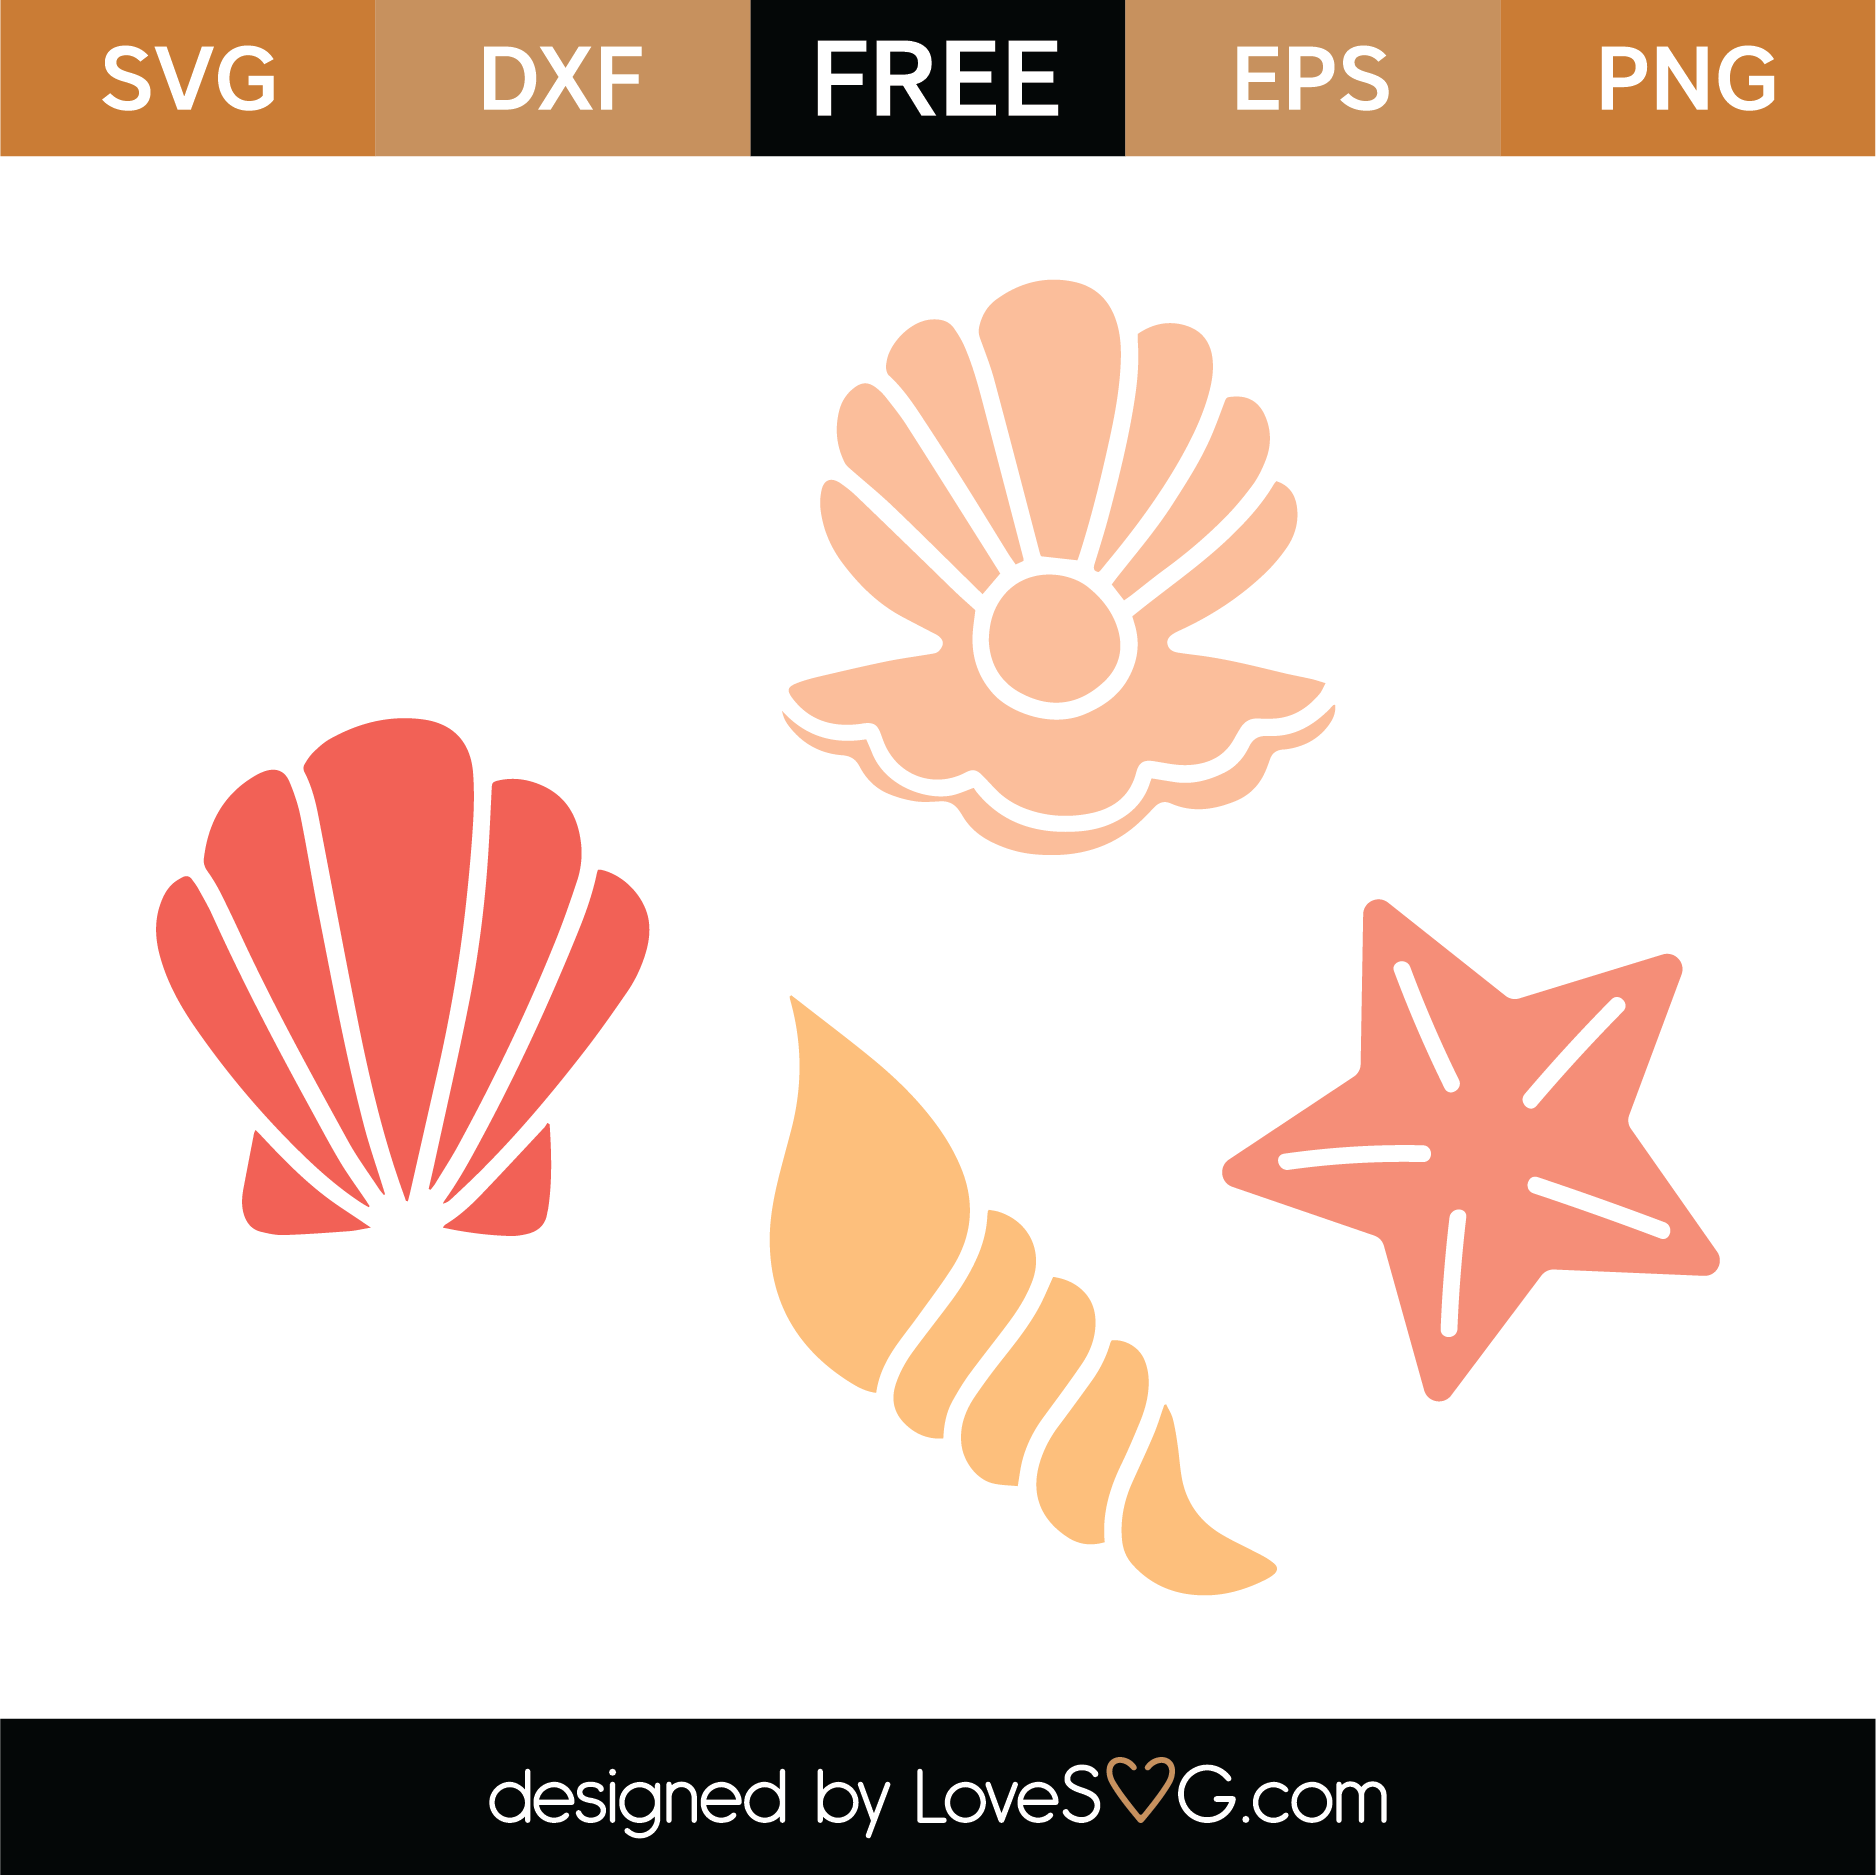 Download Free Sea Shells SVG Cut File | Lovesvg.com